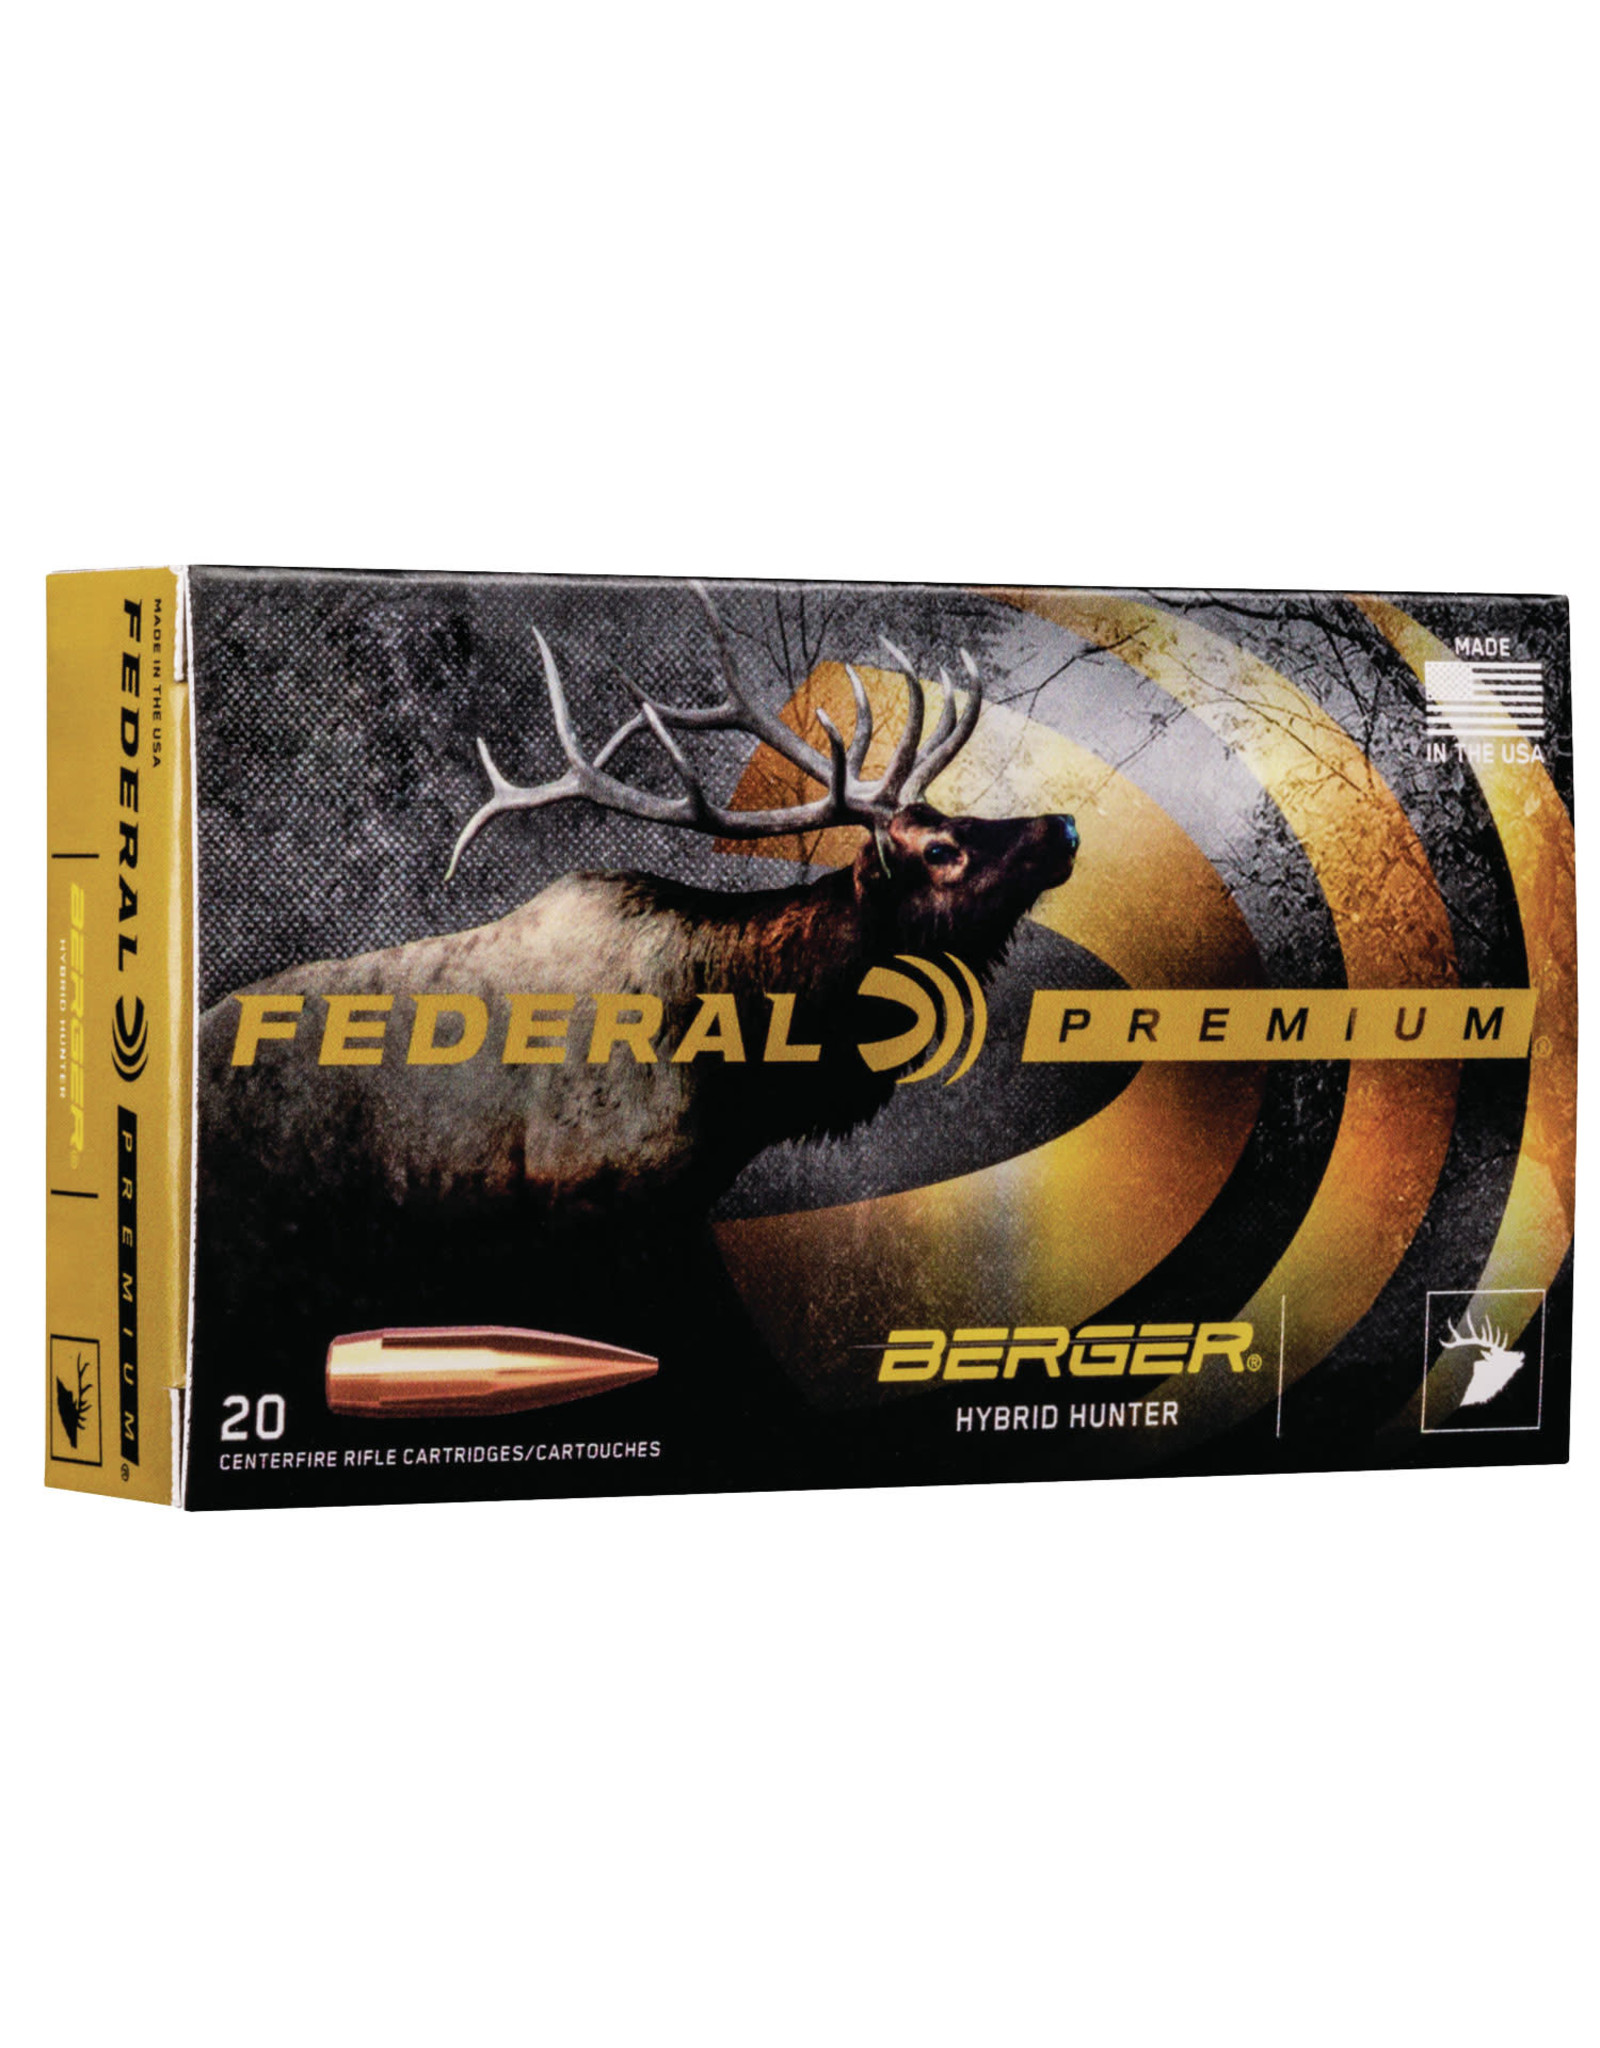 Federal Premium 6.5 Creedmoor Berger Hybrid Hunter 135 gr - 20 Count